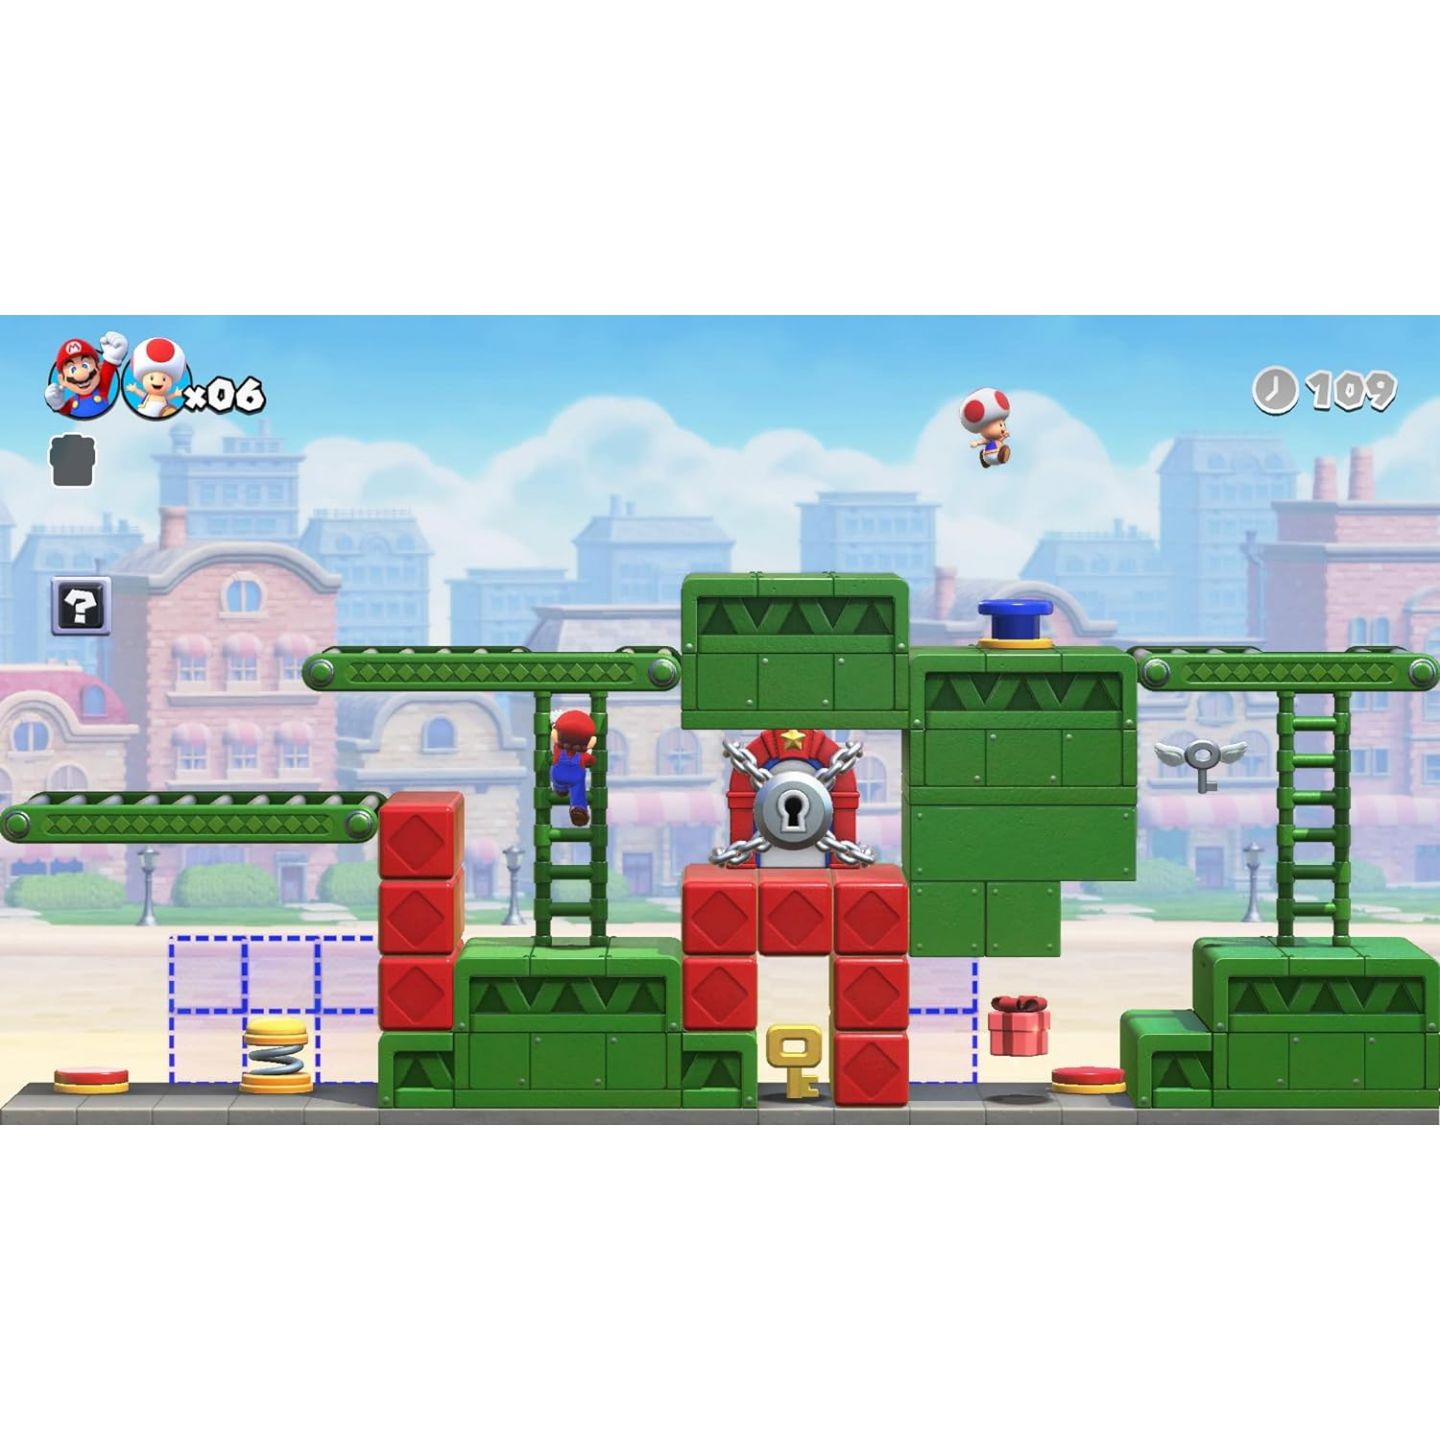 Rent Mario Vs. Donkey Kong on Nintendo Switch